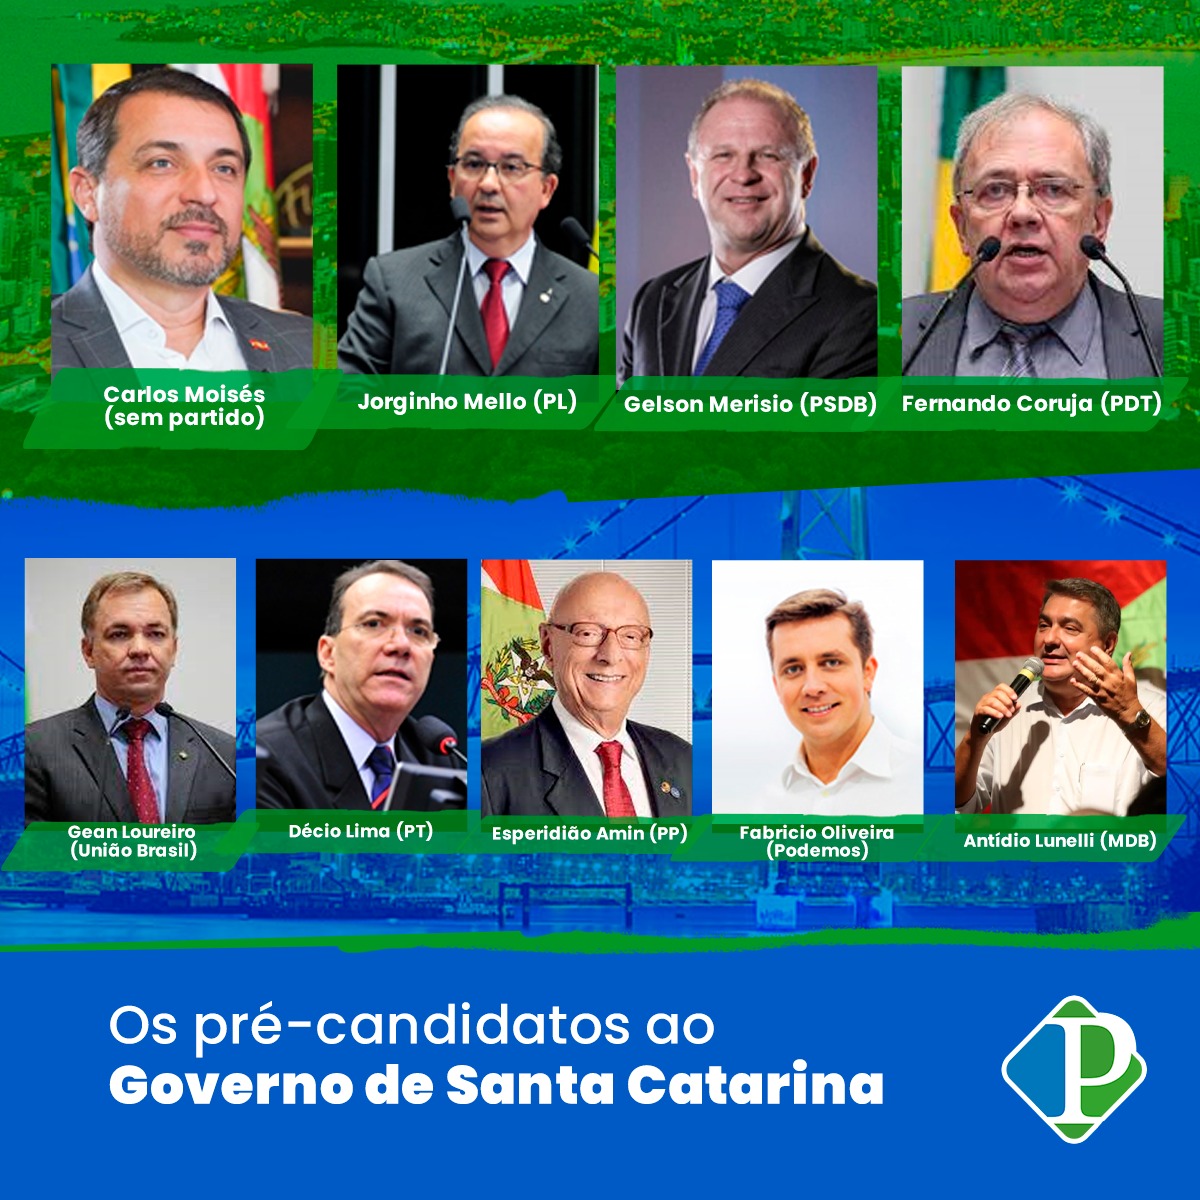 Os pré-candidatos ao Governo de Santa Catarina